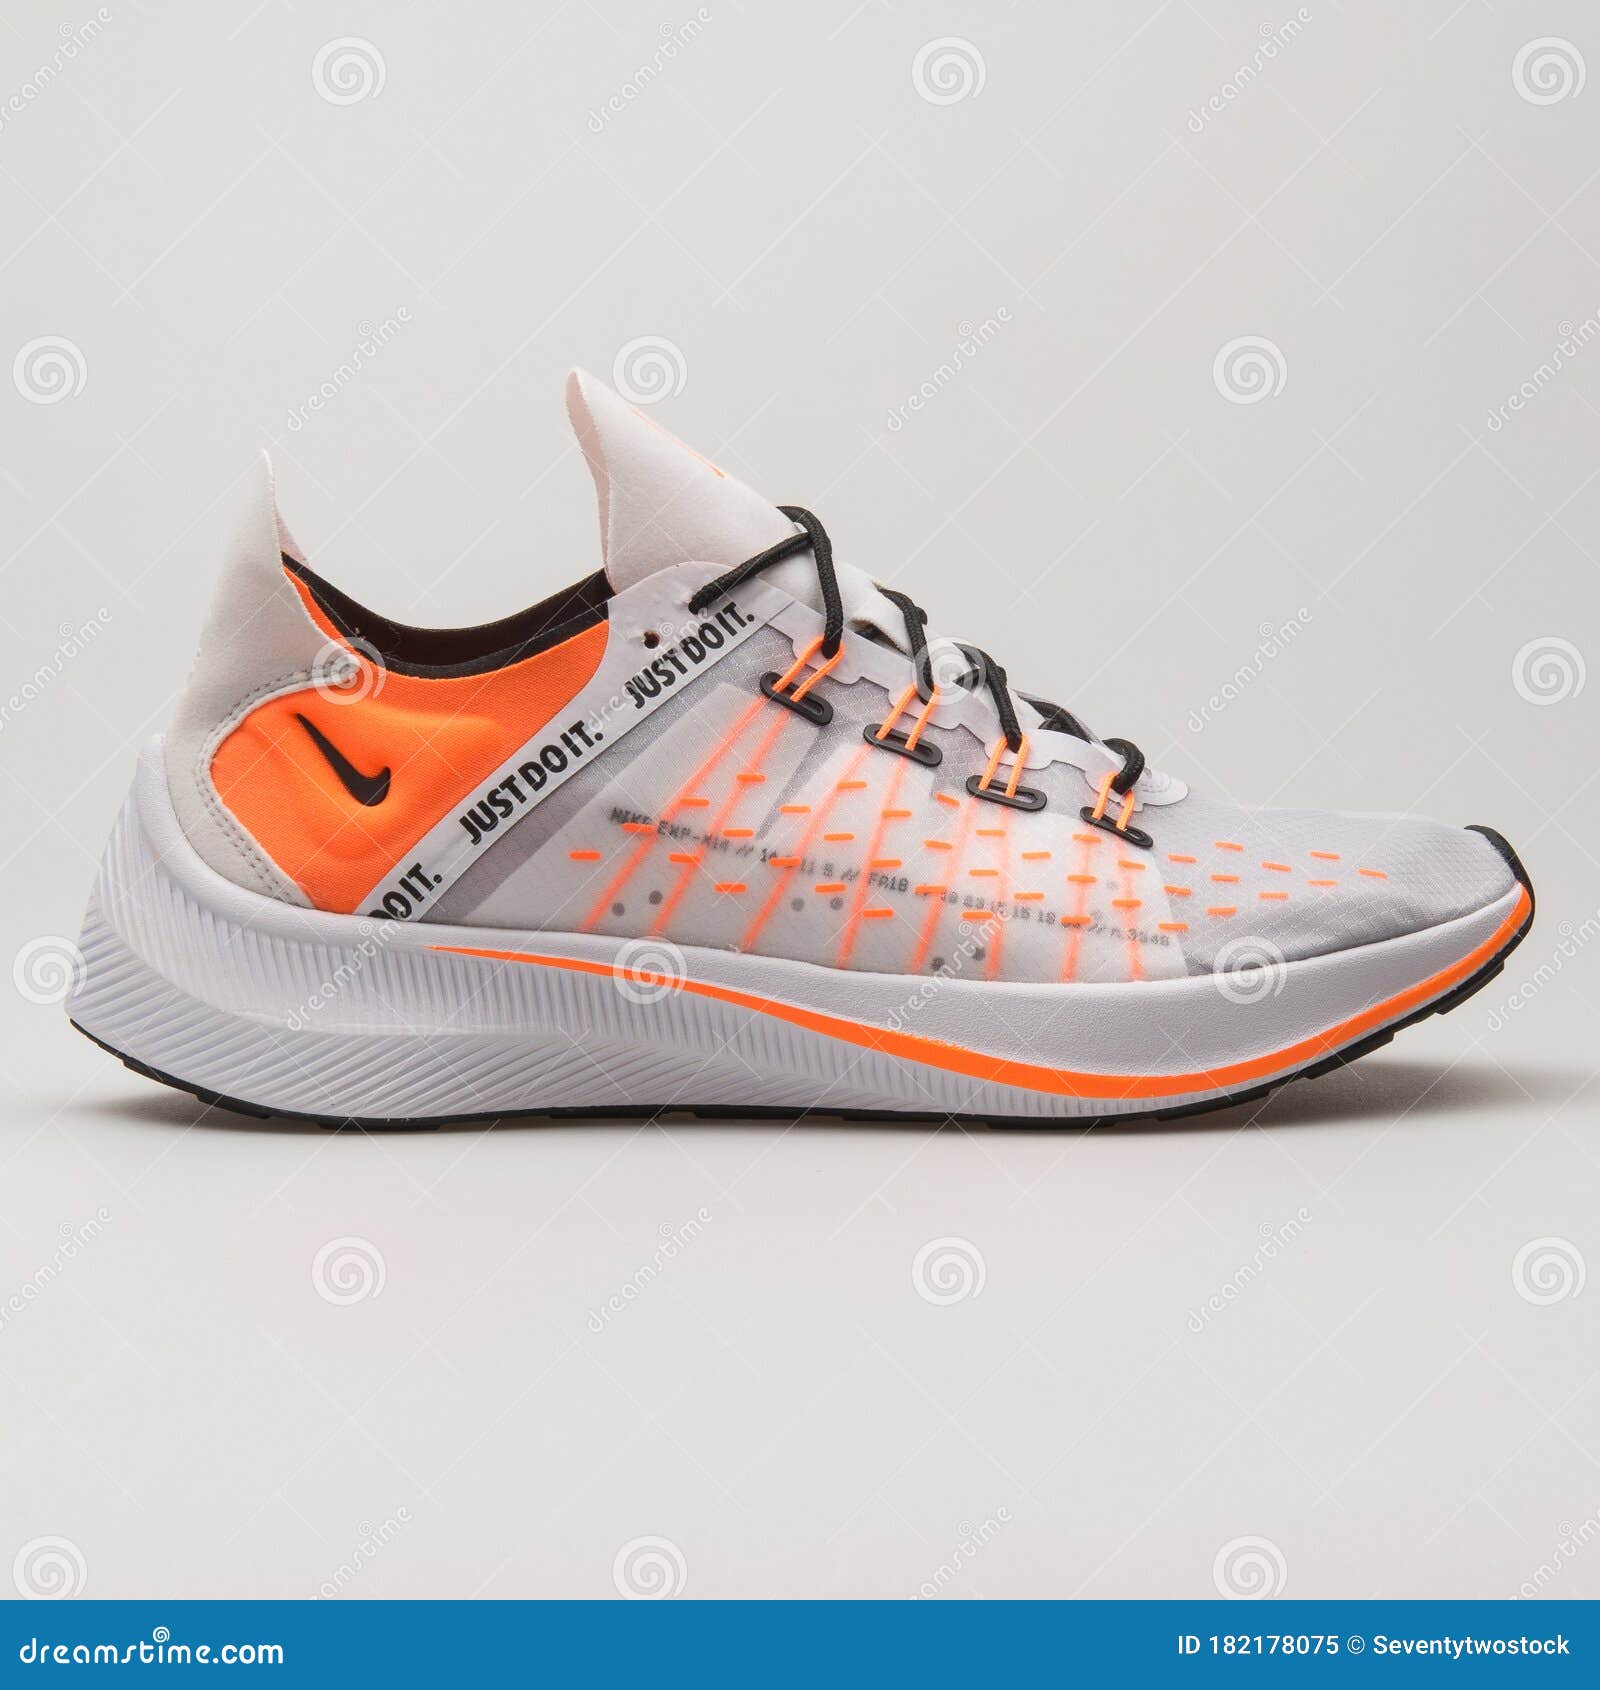 Nike Exp SE White, and Black Sneaker - Image of product, kicks: 182178075